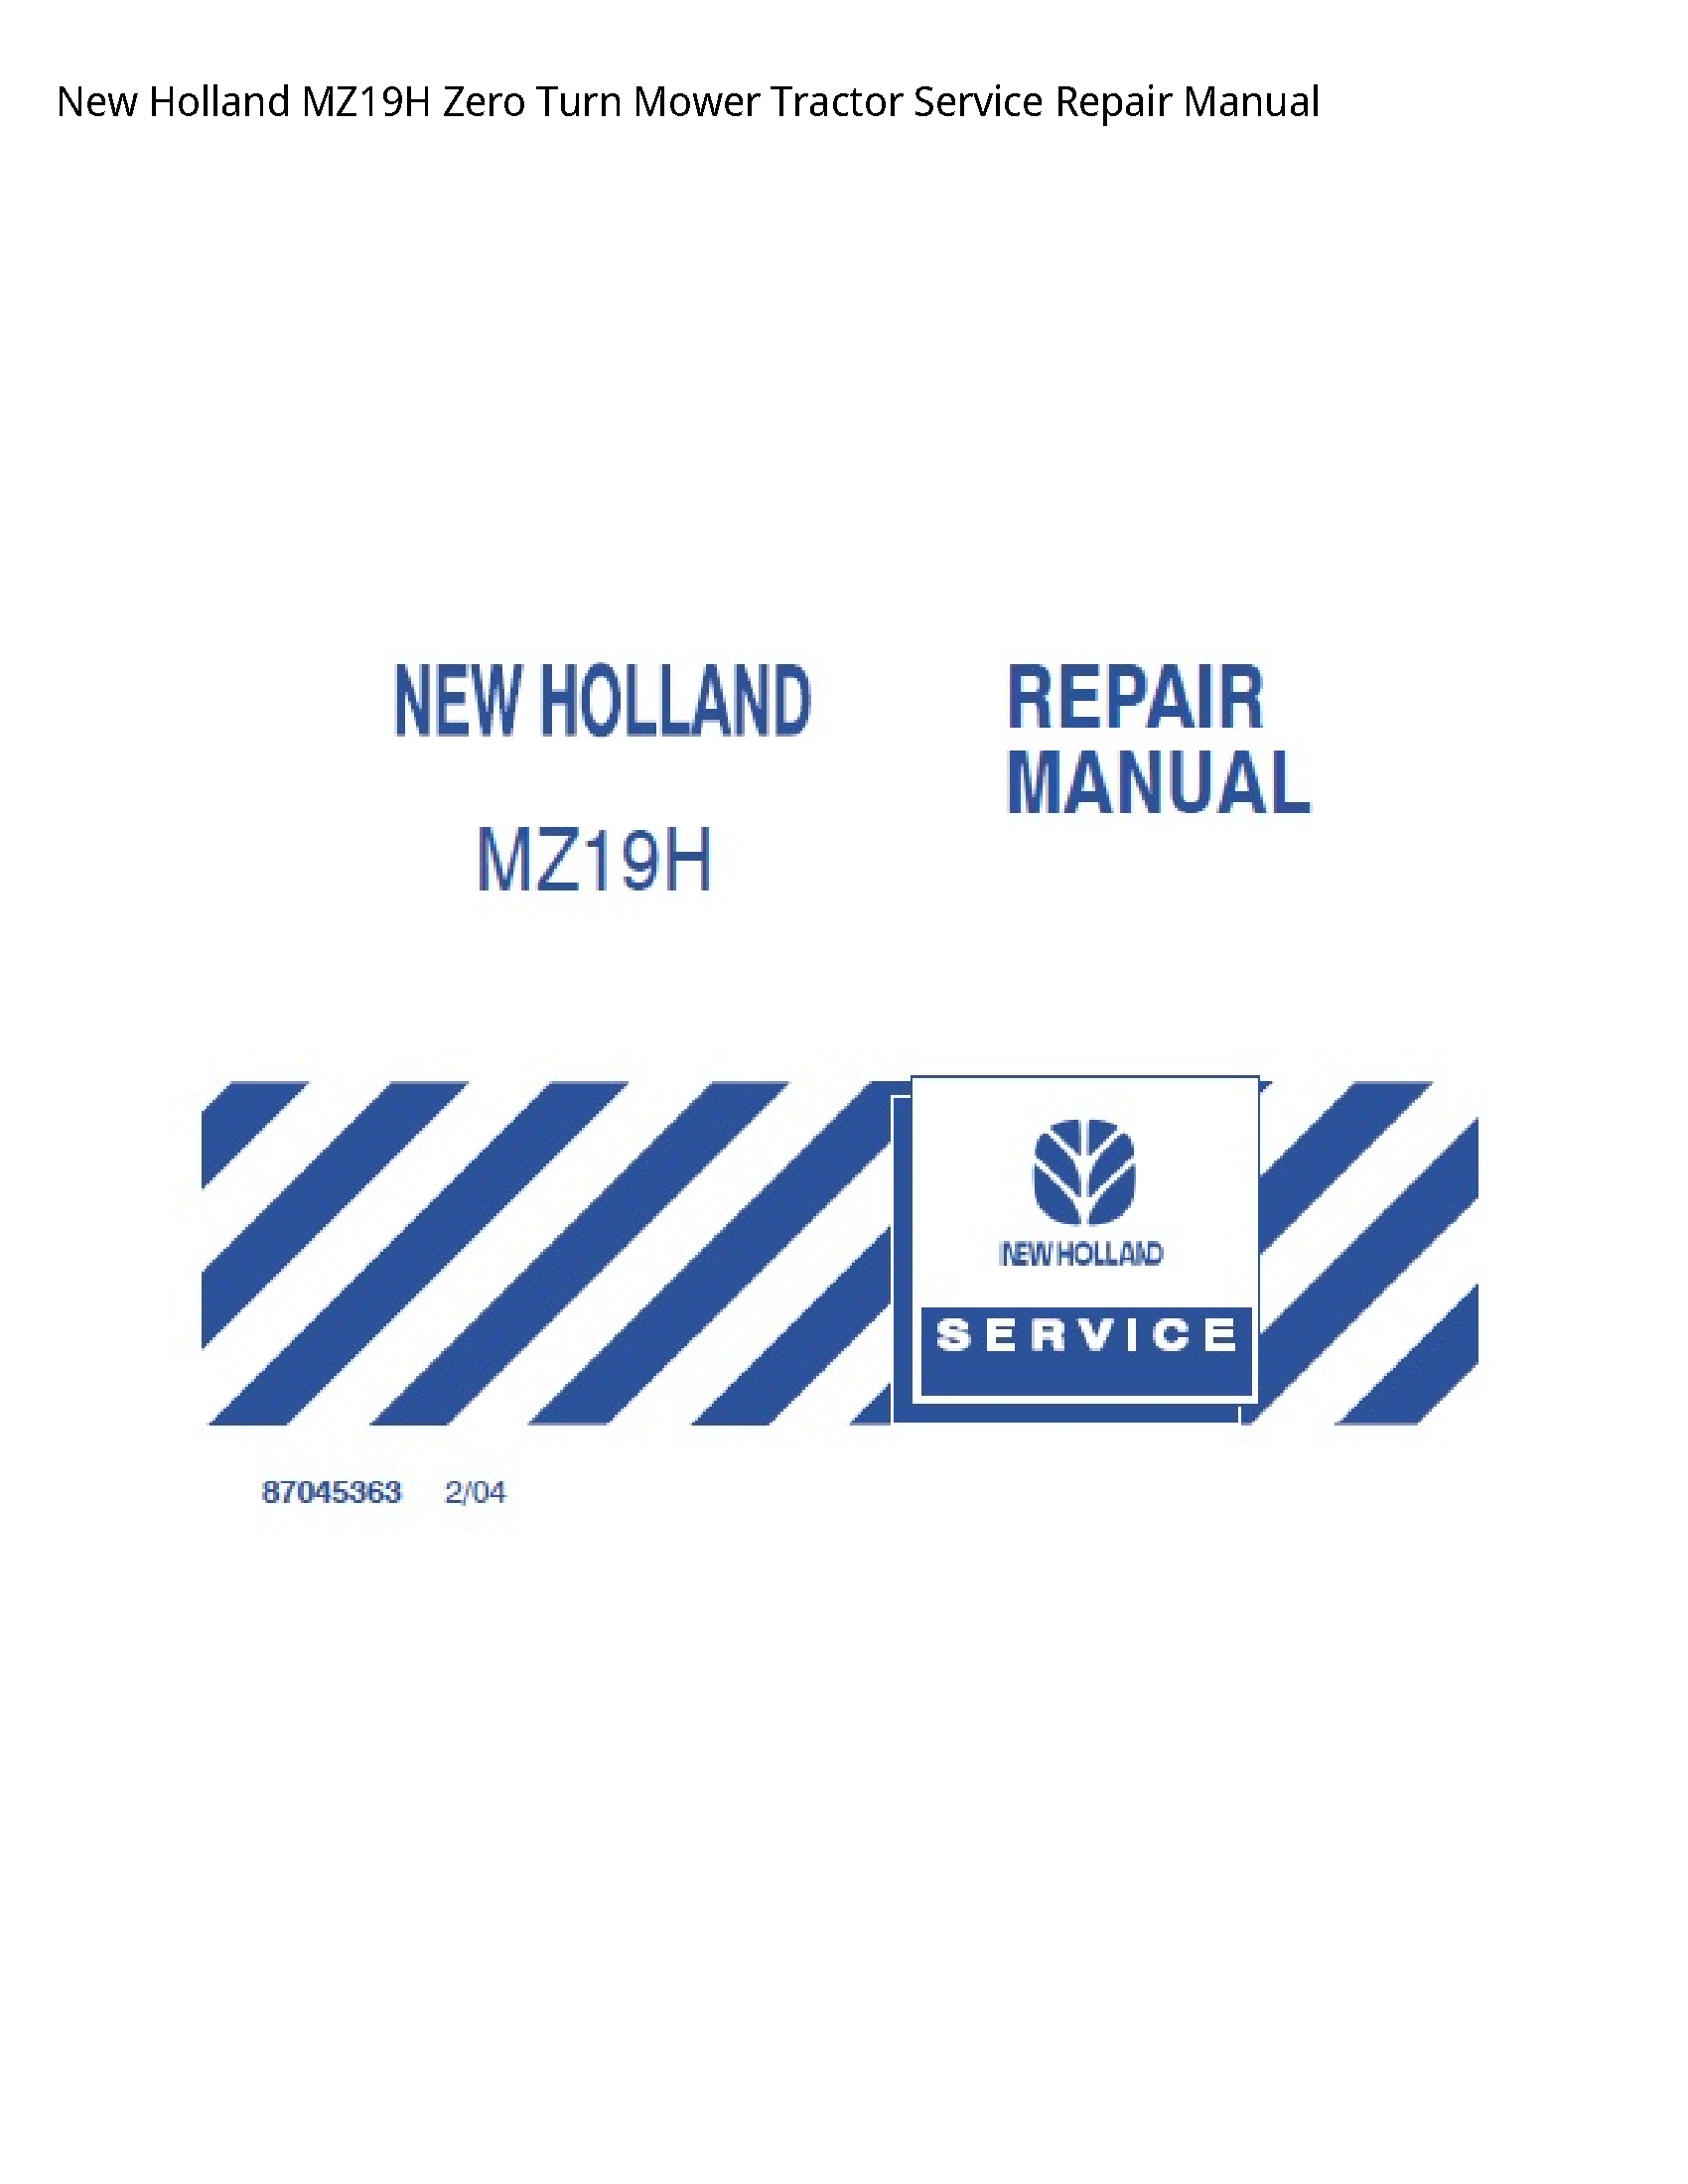 New Holland MZ19H Zero Turn Mower Tractor manual